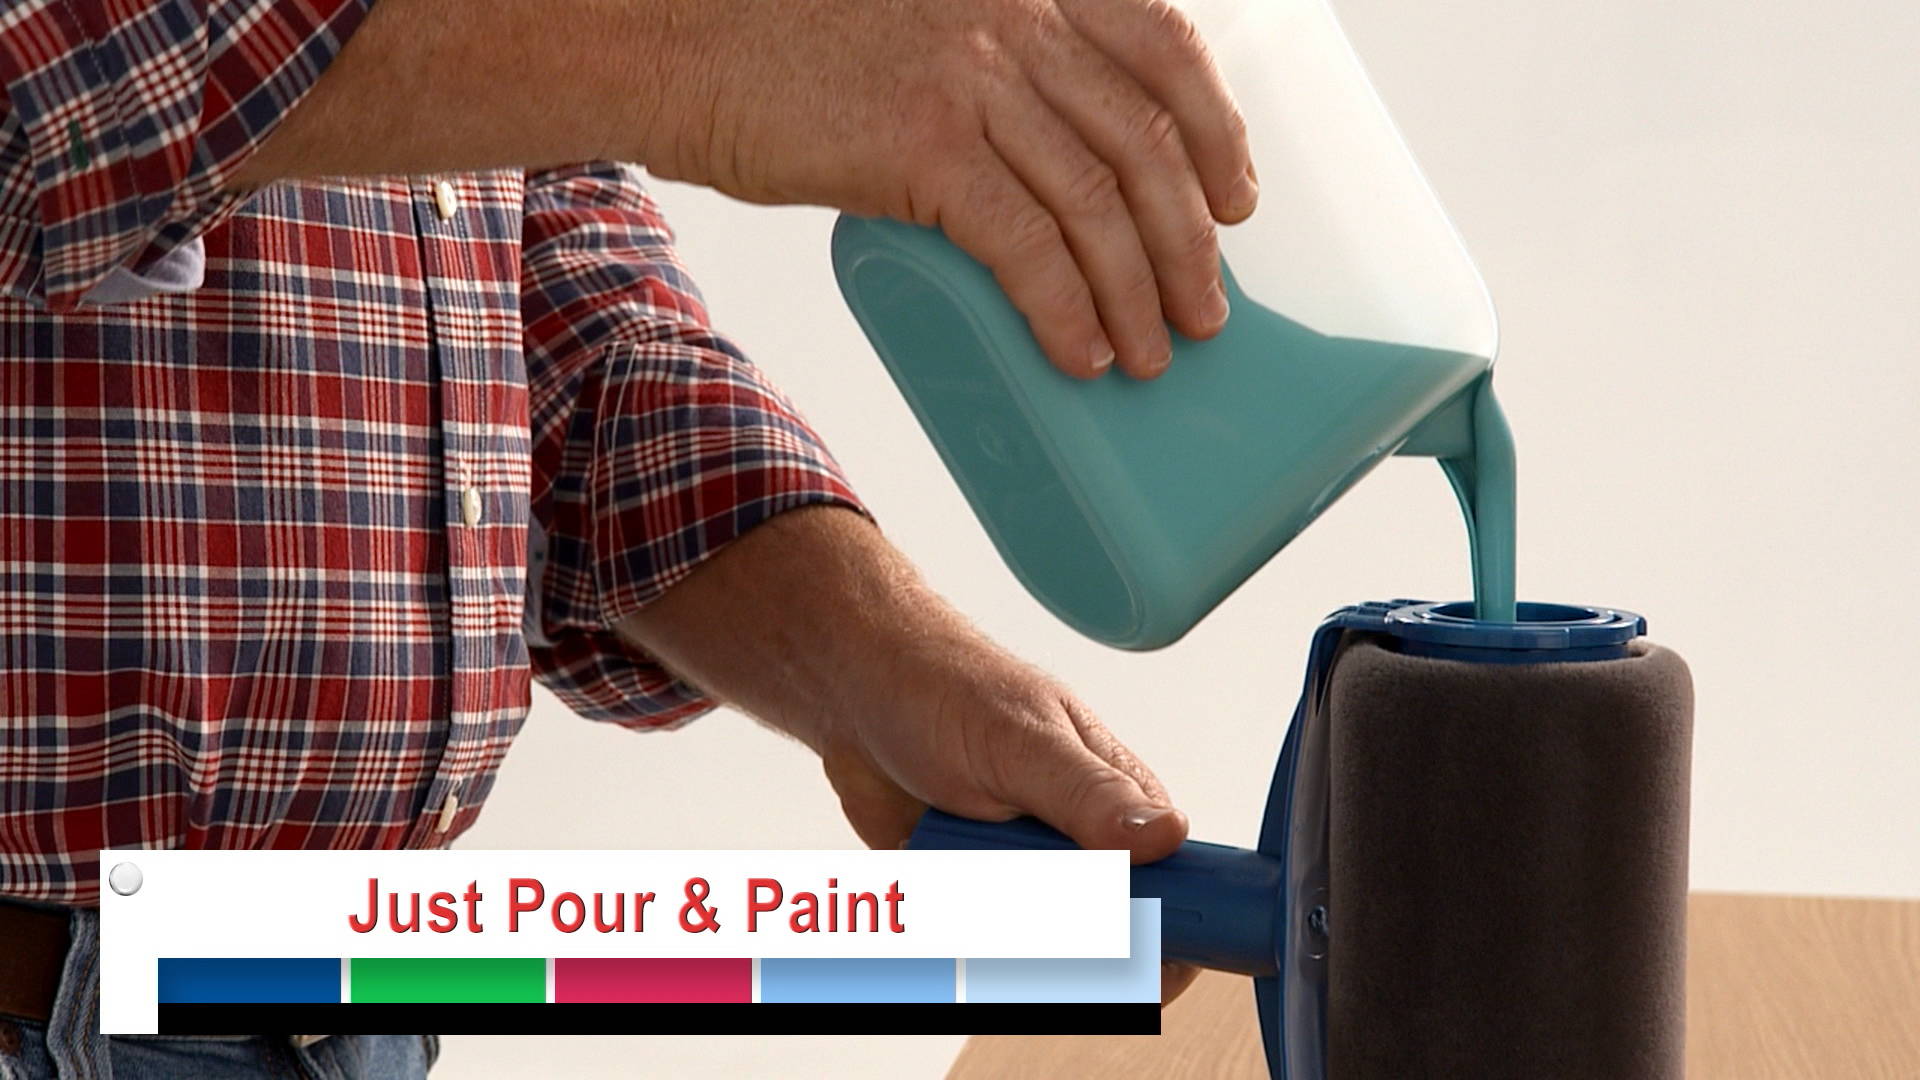 Runner The – Pro Paint Renovator Shop TV